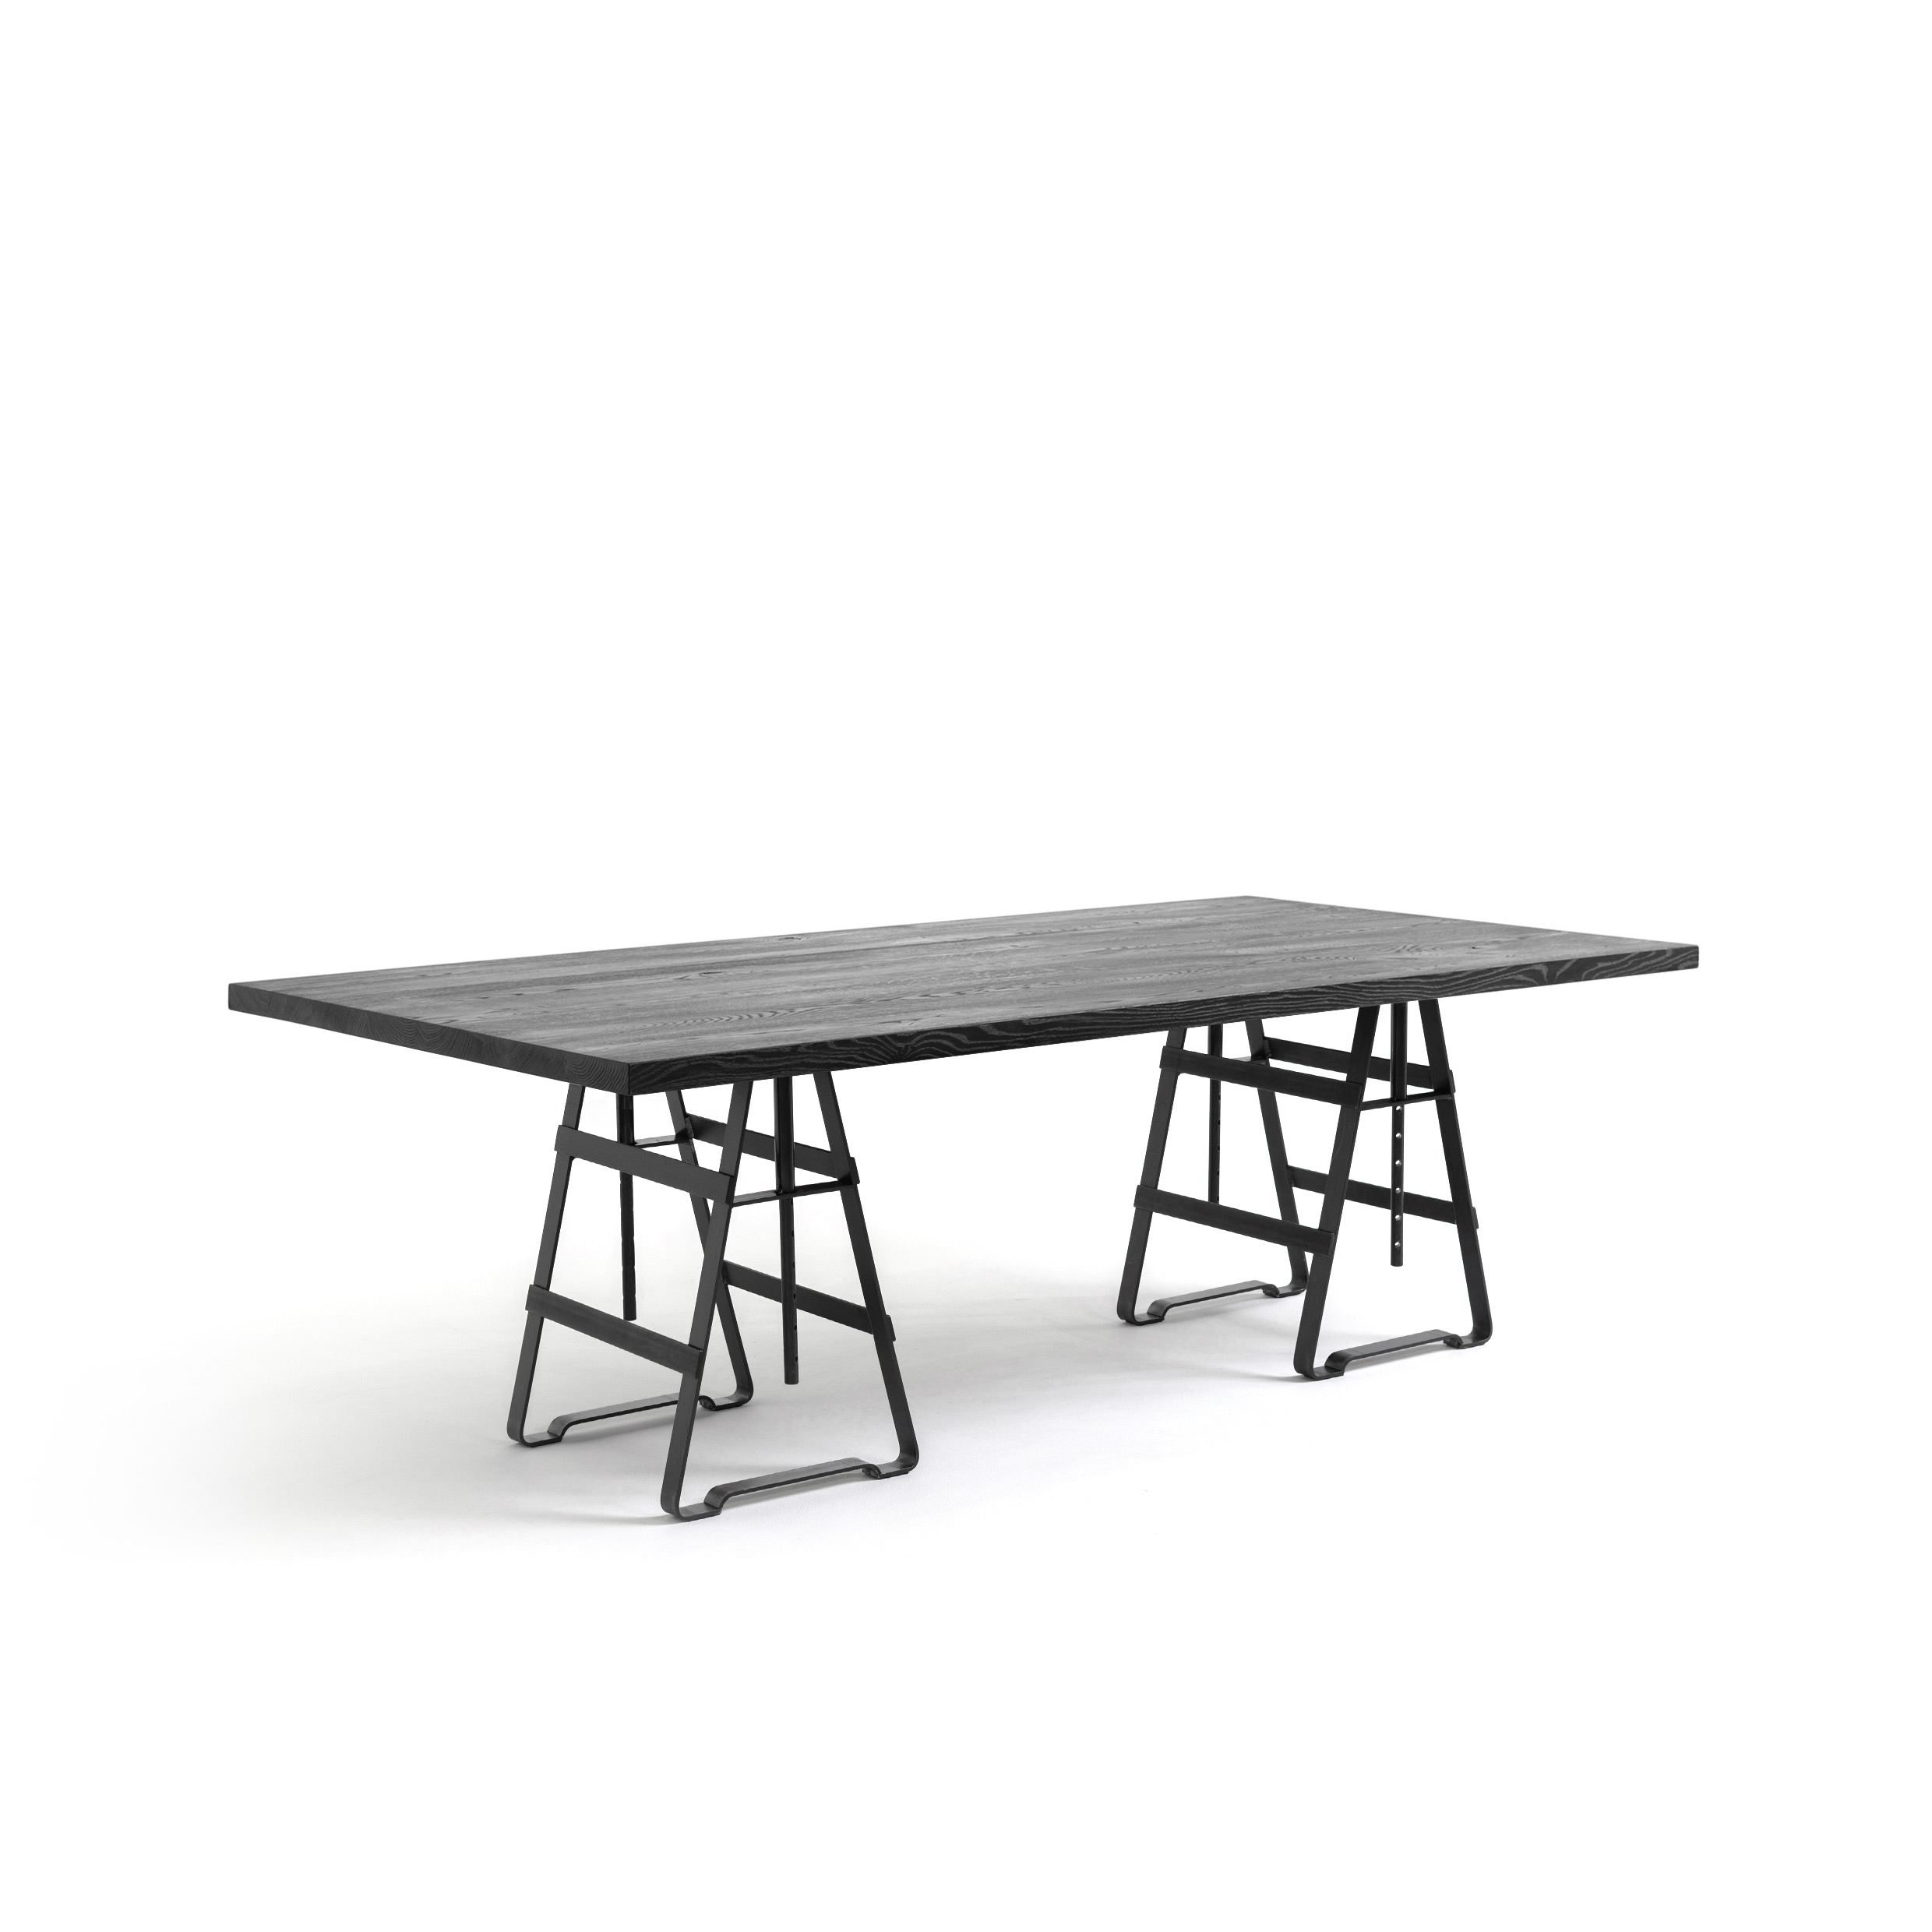 FORM EXCLUSIVE // FYNN - DINING TABLE | GERMAN OAK | BLACK CARED - 180CM X 90CM X 4CM - LACK MONKEY BLACK